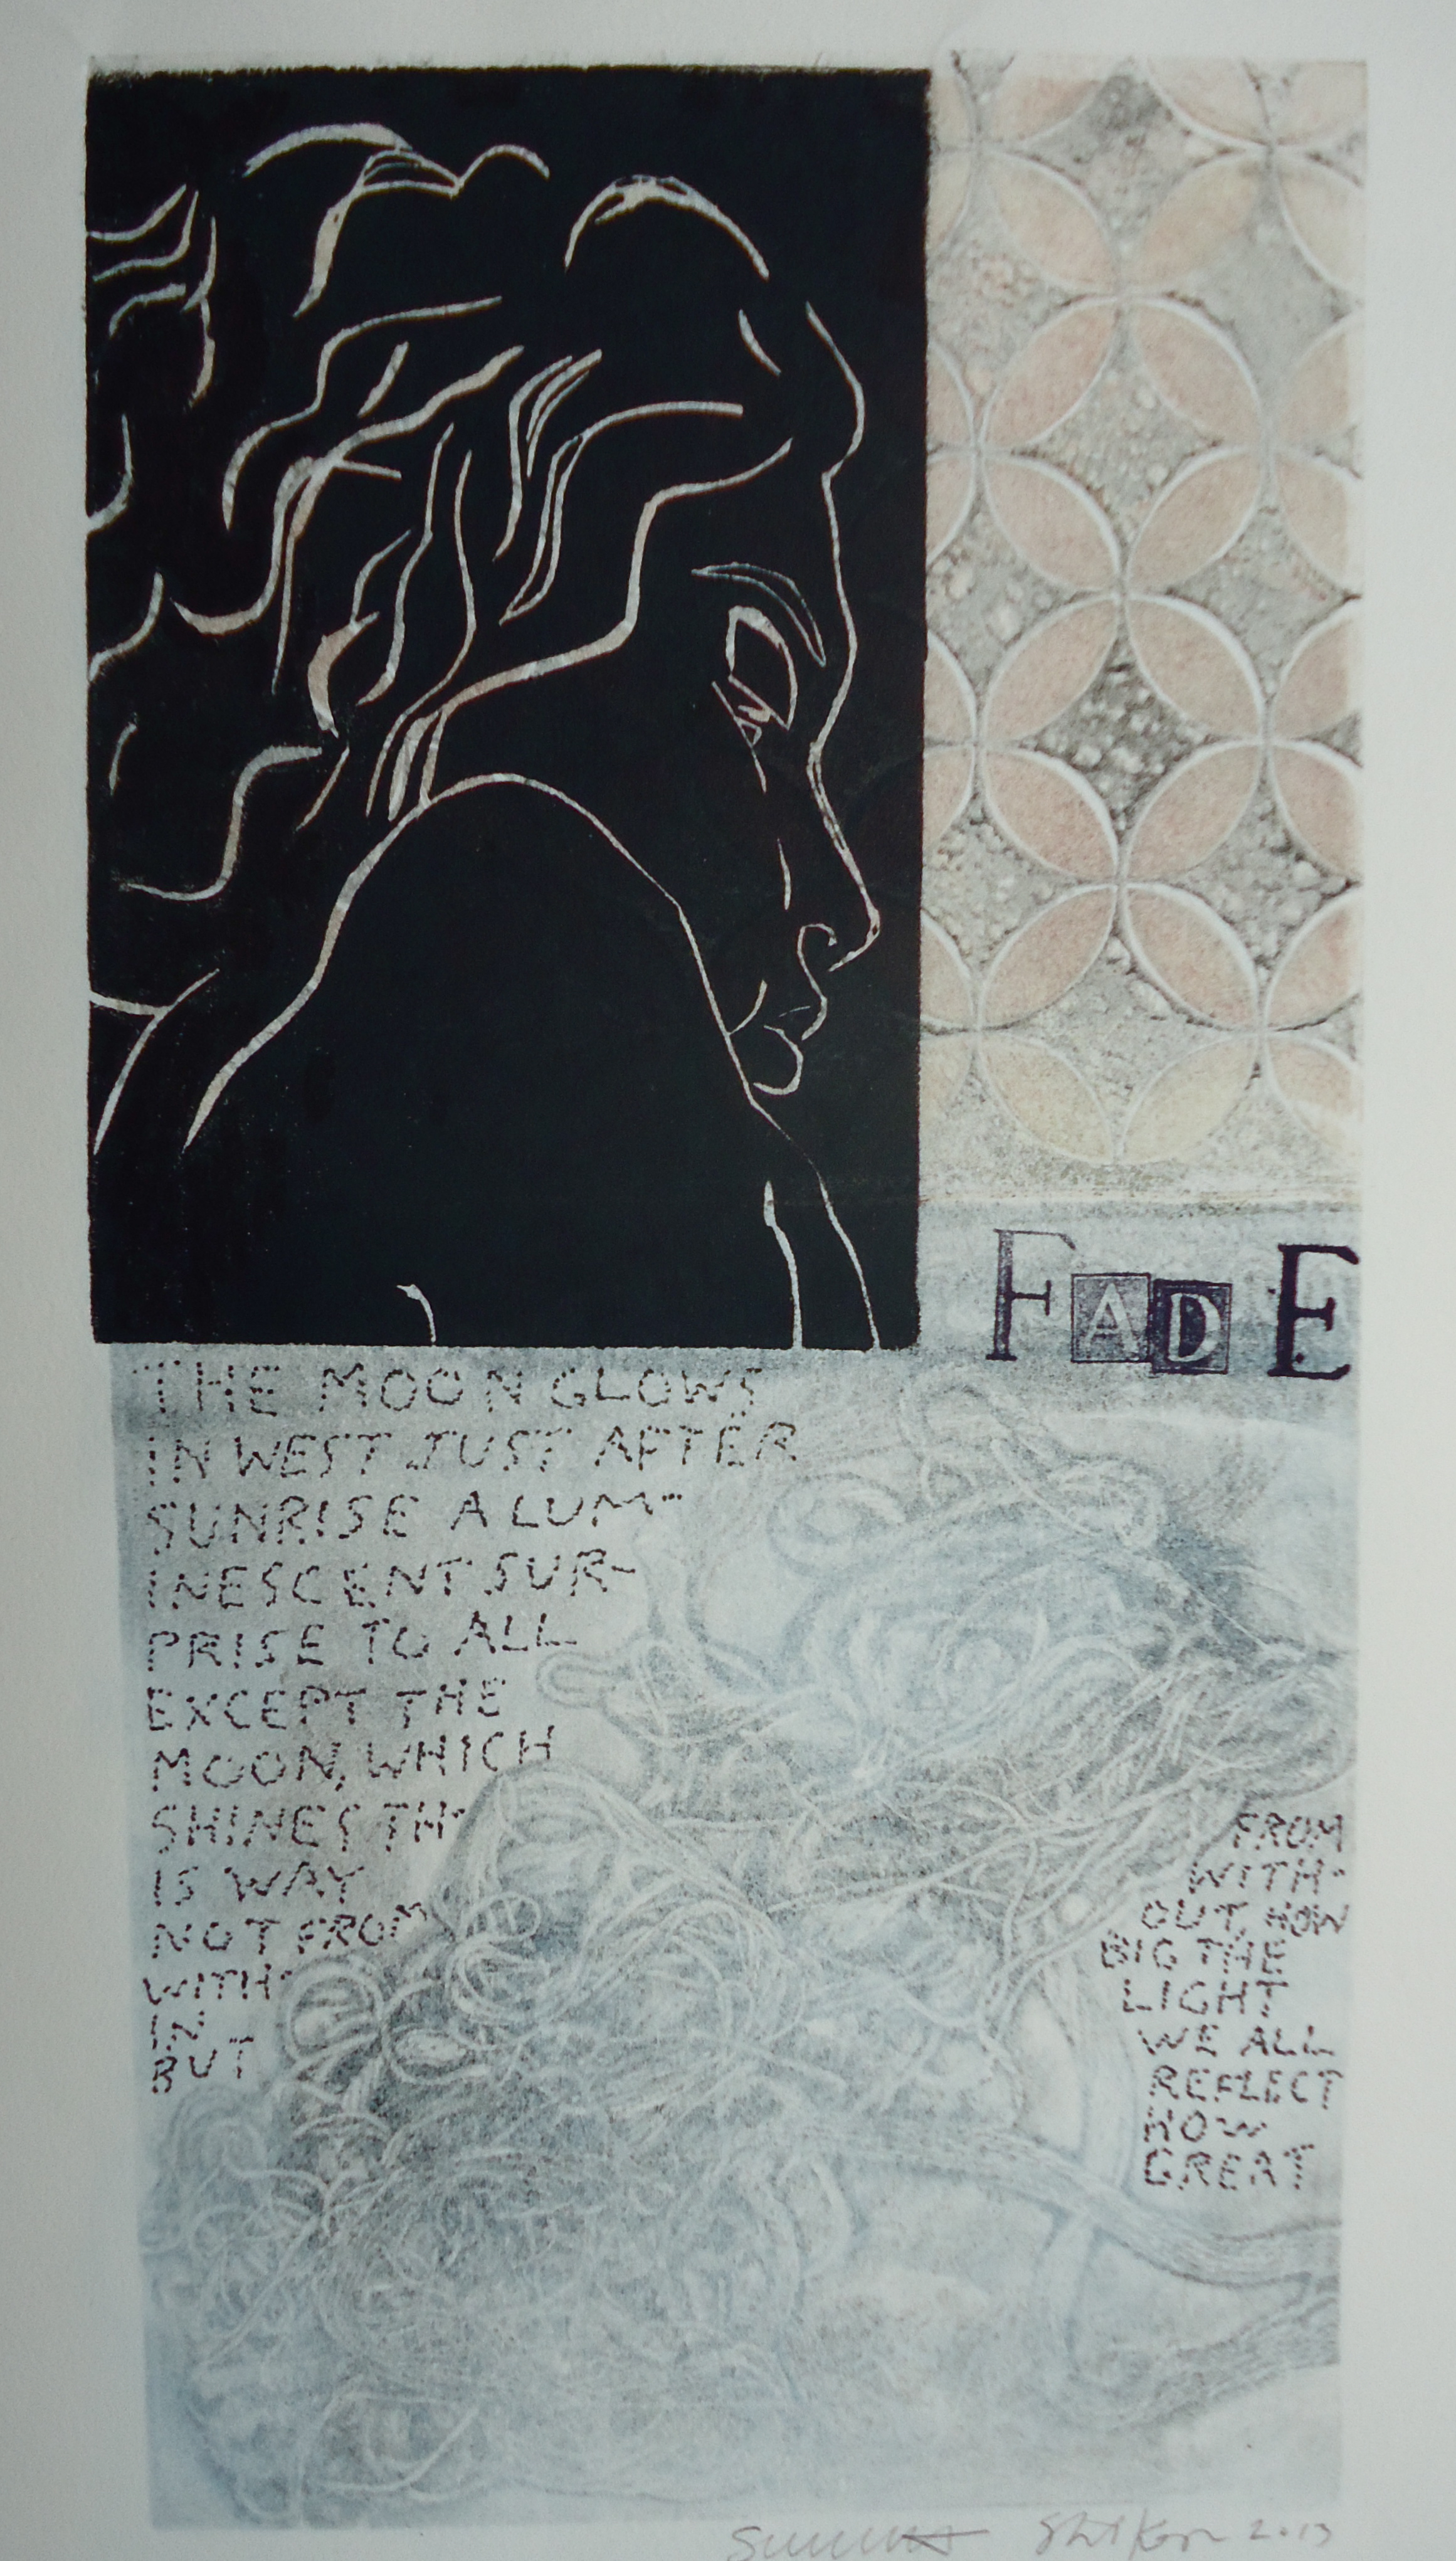   Fade   6 x 12 inches  mixed media  image: Susan Webster  hand written and stamped&nbsp;text: Stuart Kestenbaum  2013 